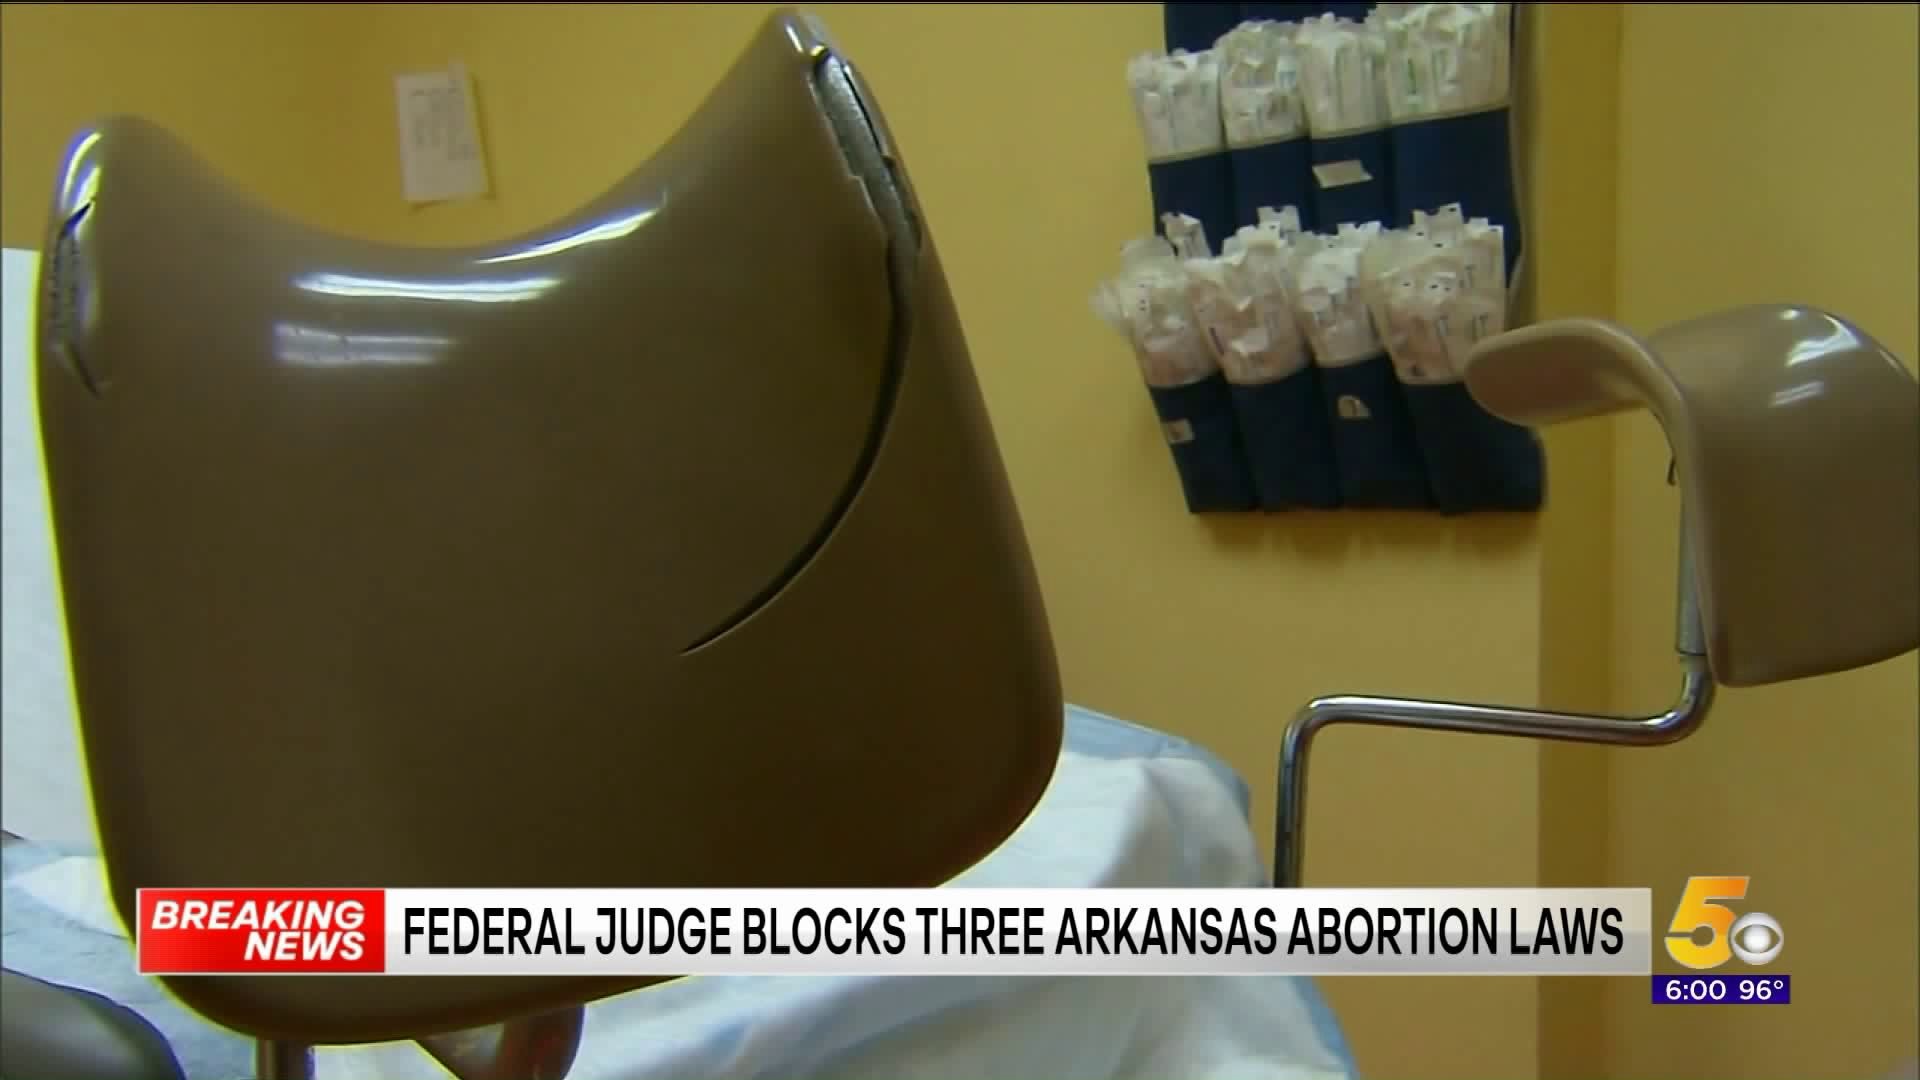 Federal Judge Blocks 3 Arkansas Abortion Laws